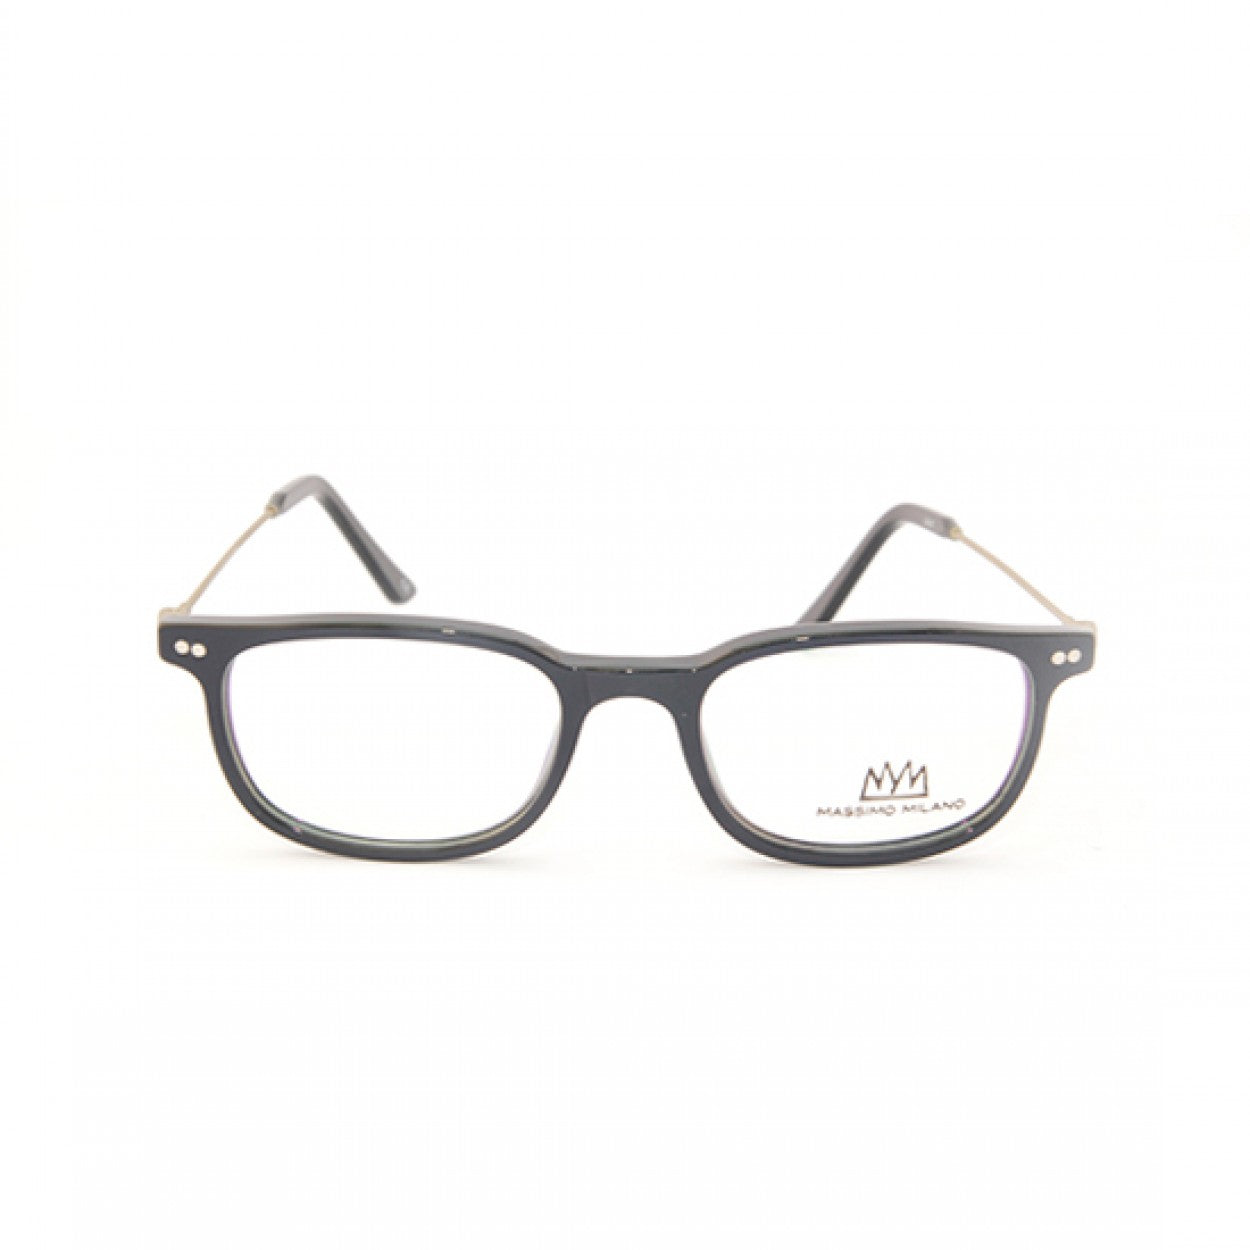 Acetate Eyeglass Frames - Mod.2010-0001